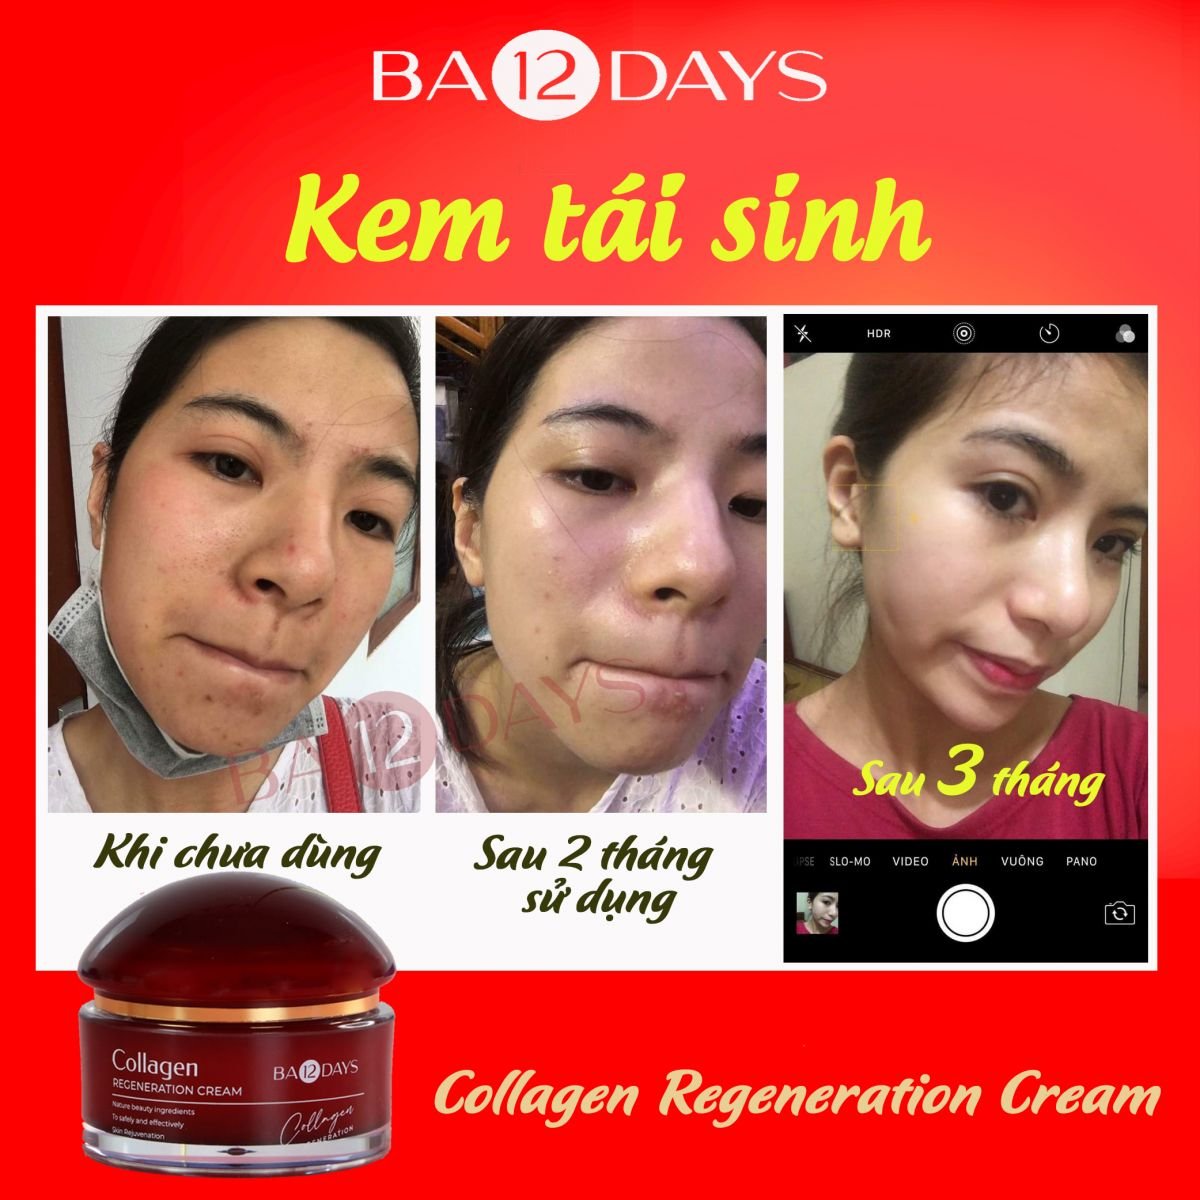 Kem face Collagen tái tạo da Ba12days Cosmetics giúp tái sinh làn da hoàn hảo, trẻ hóa làn da